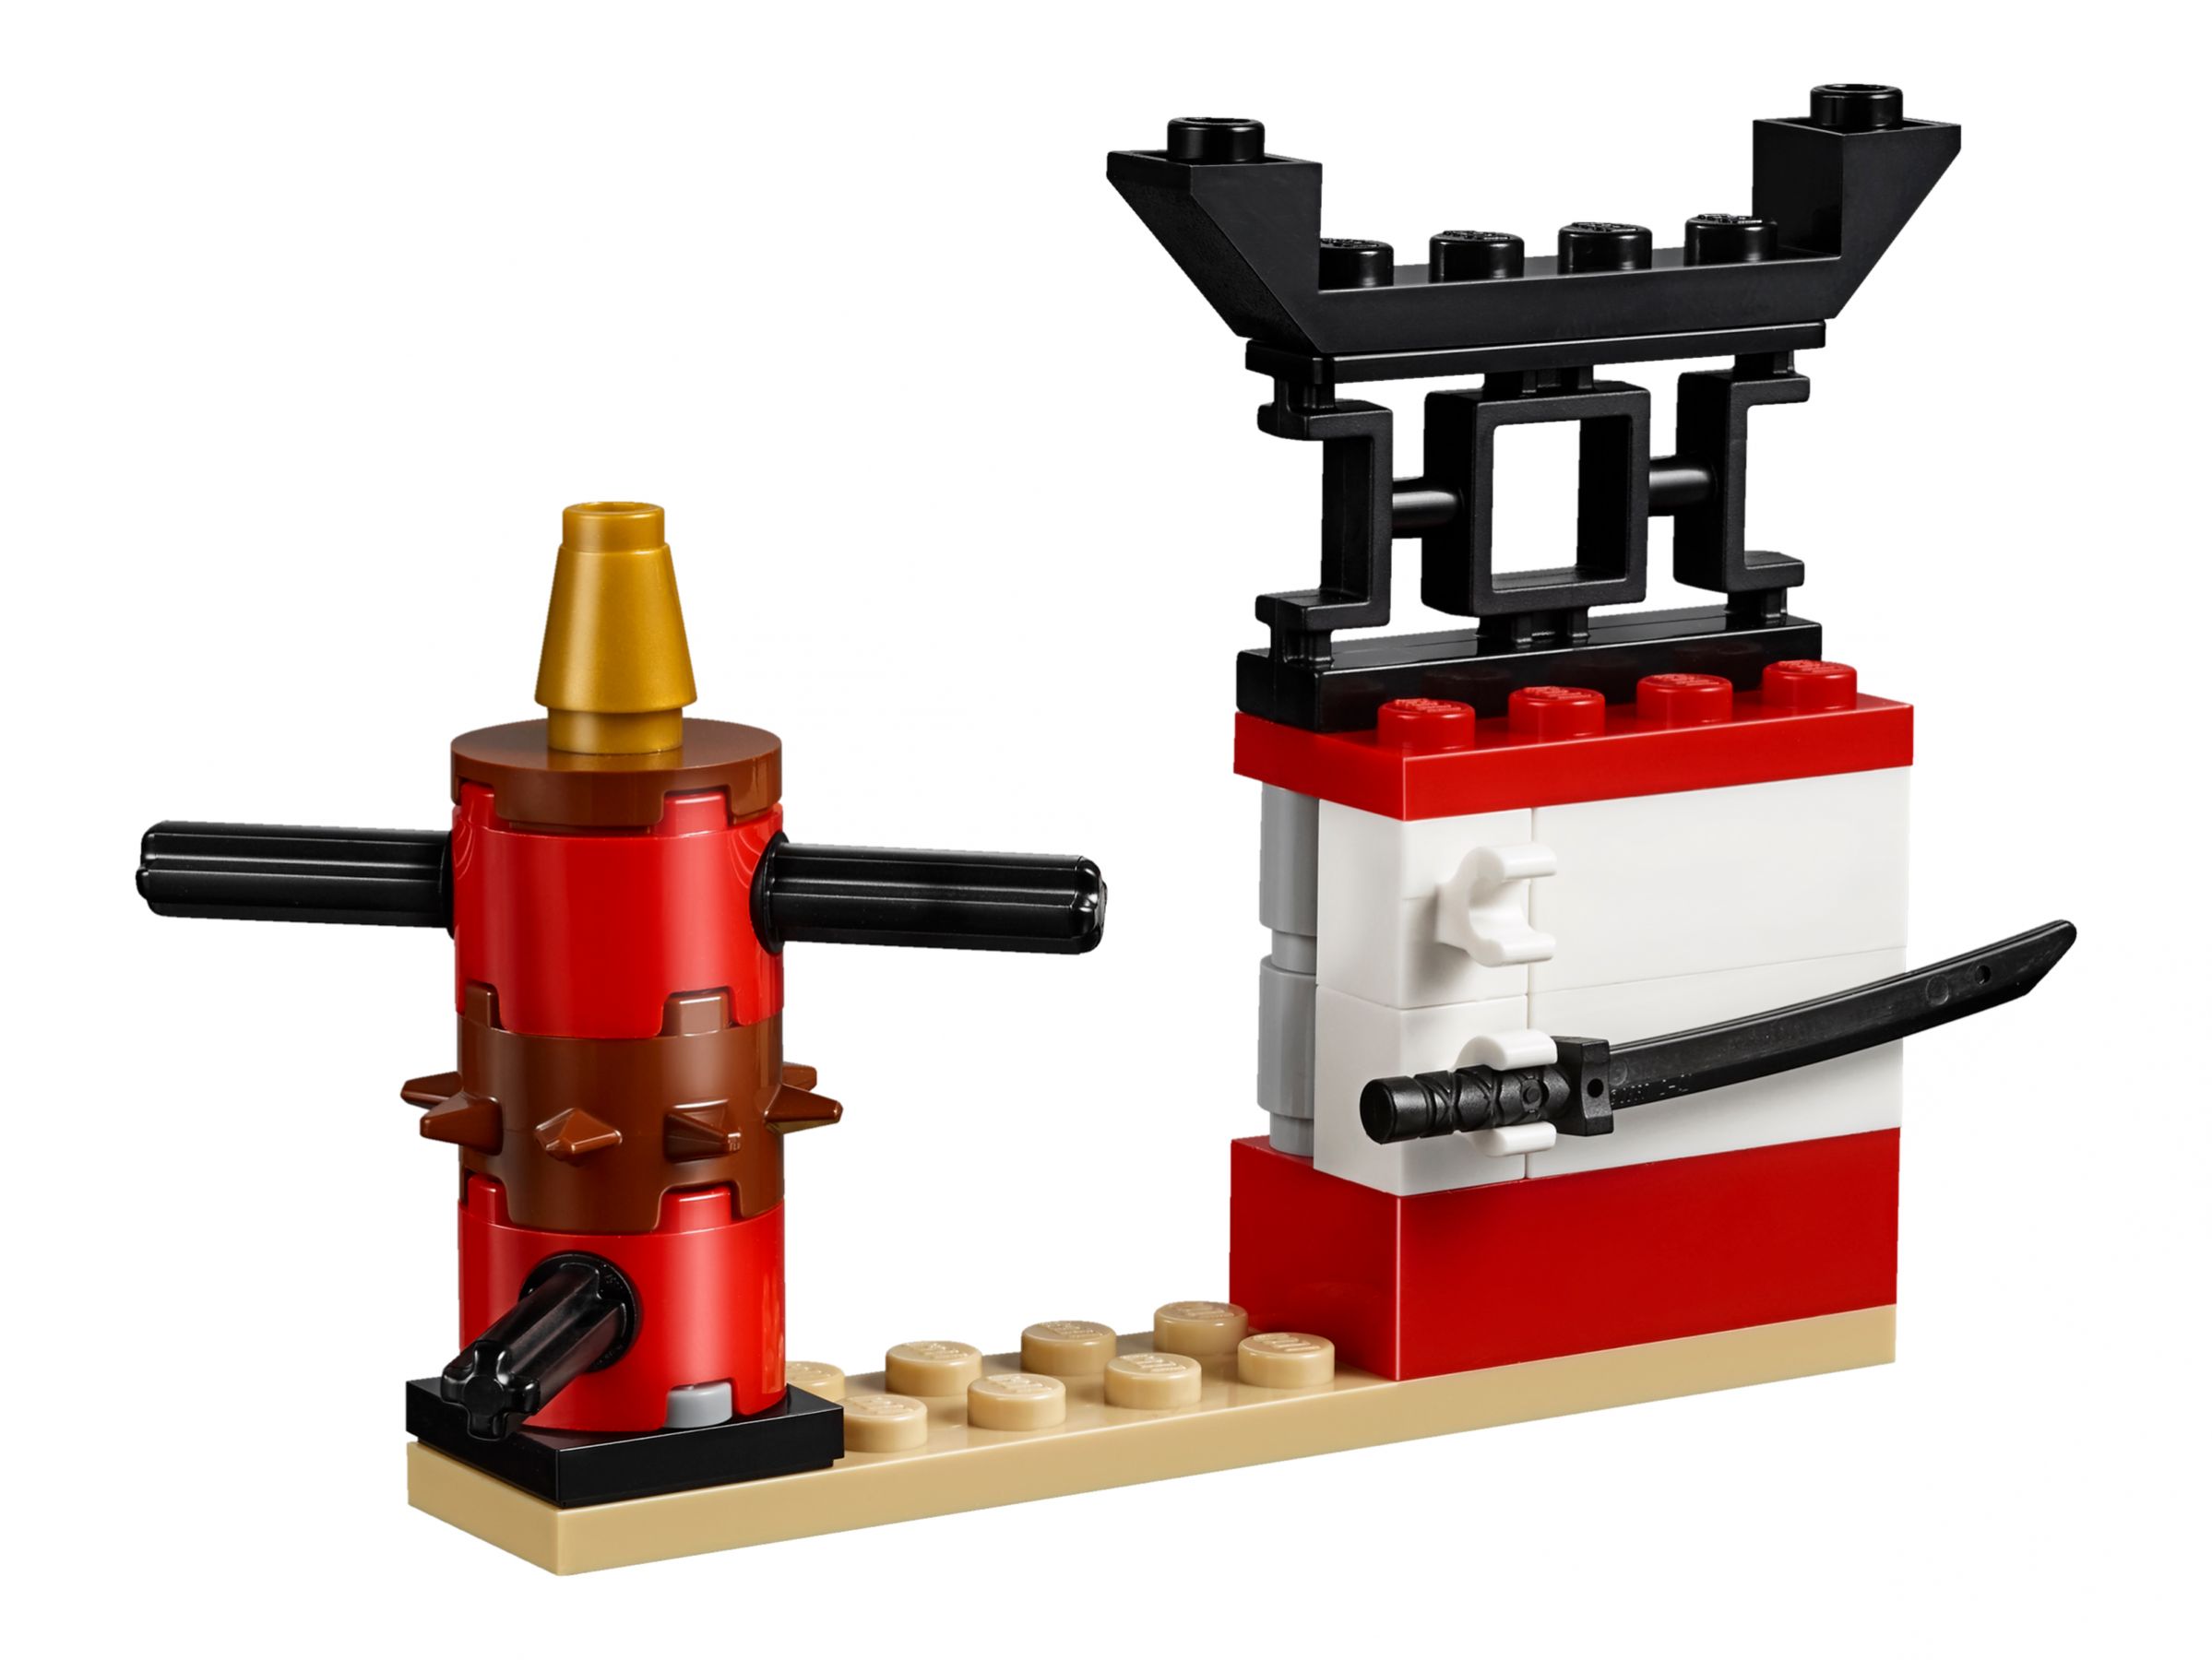 LEGO Juniors 10739 Haiangriff LEGO_10739_alt4.jpg